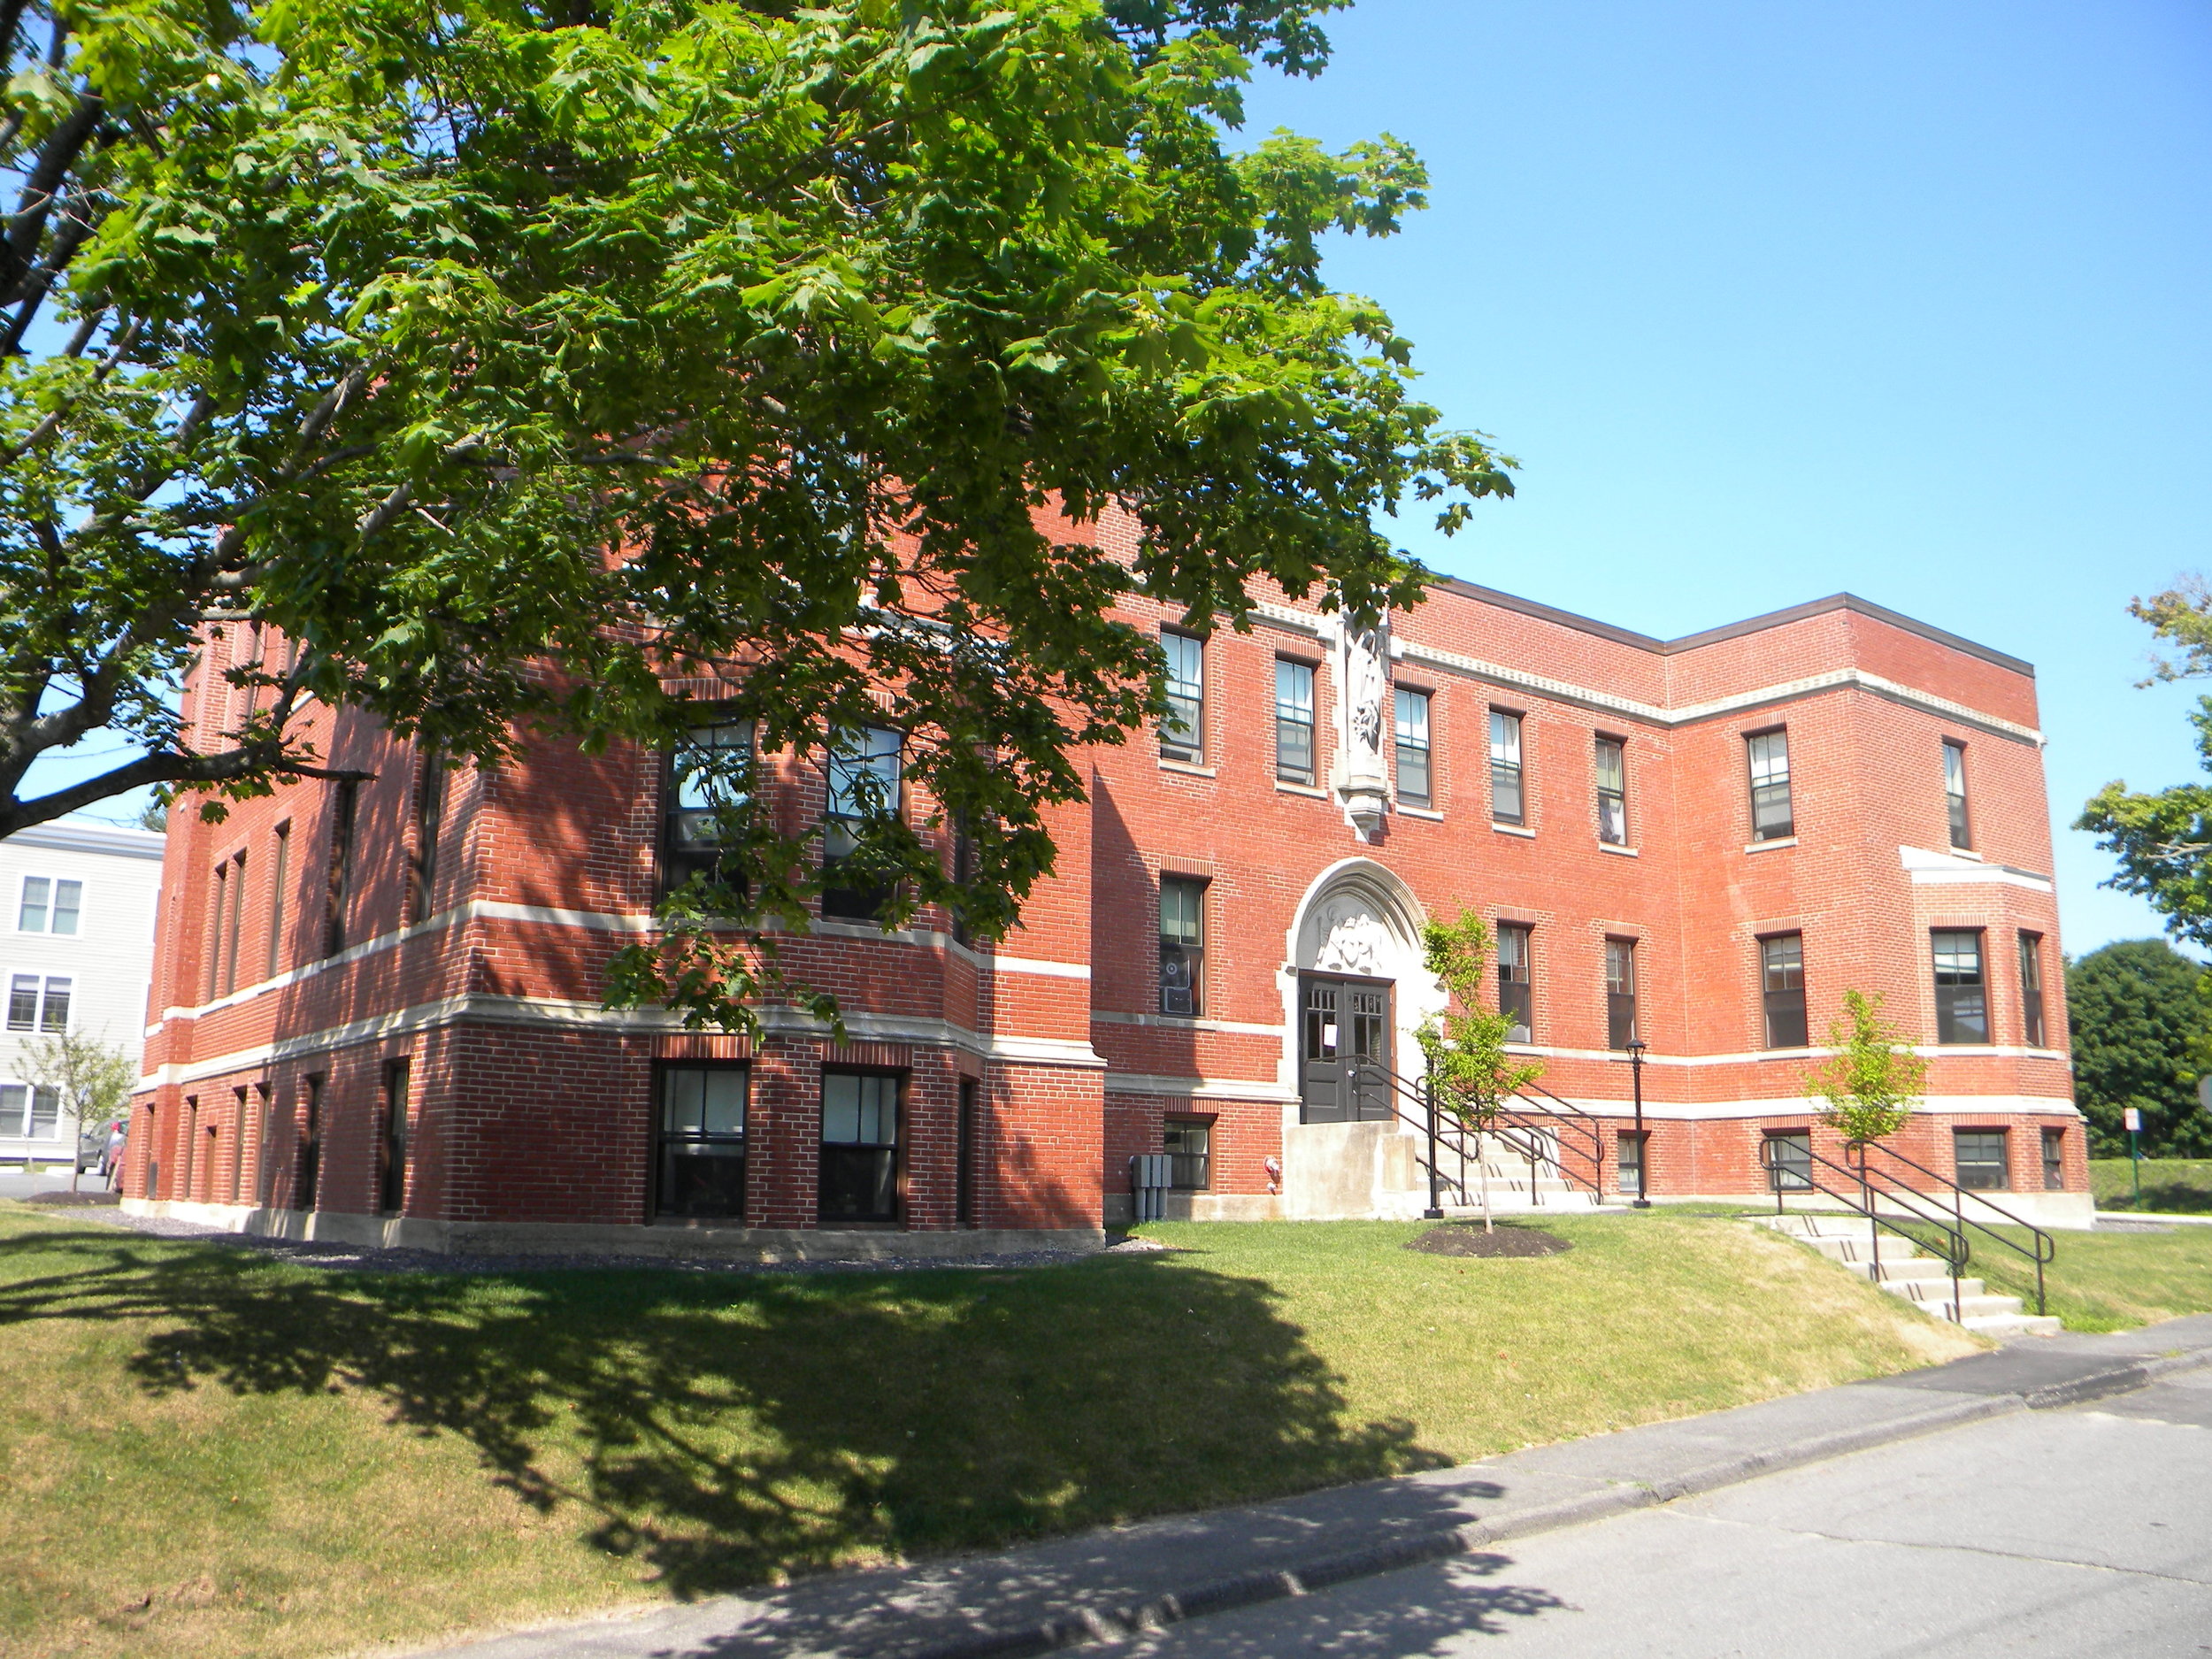 St. Hyacinth's School